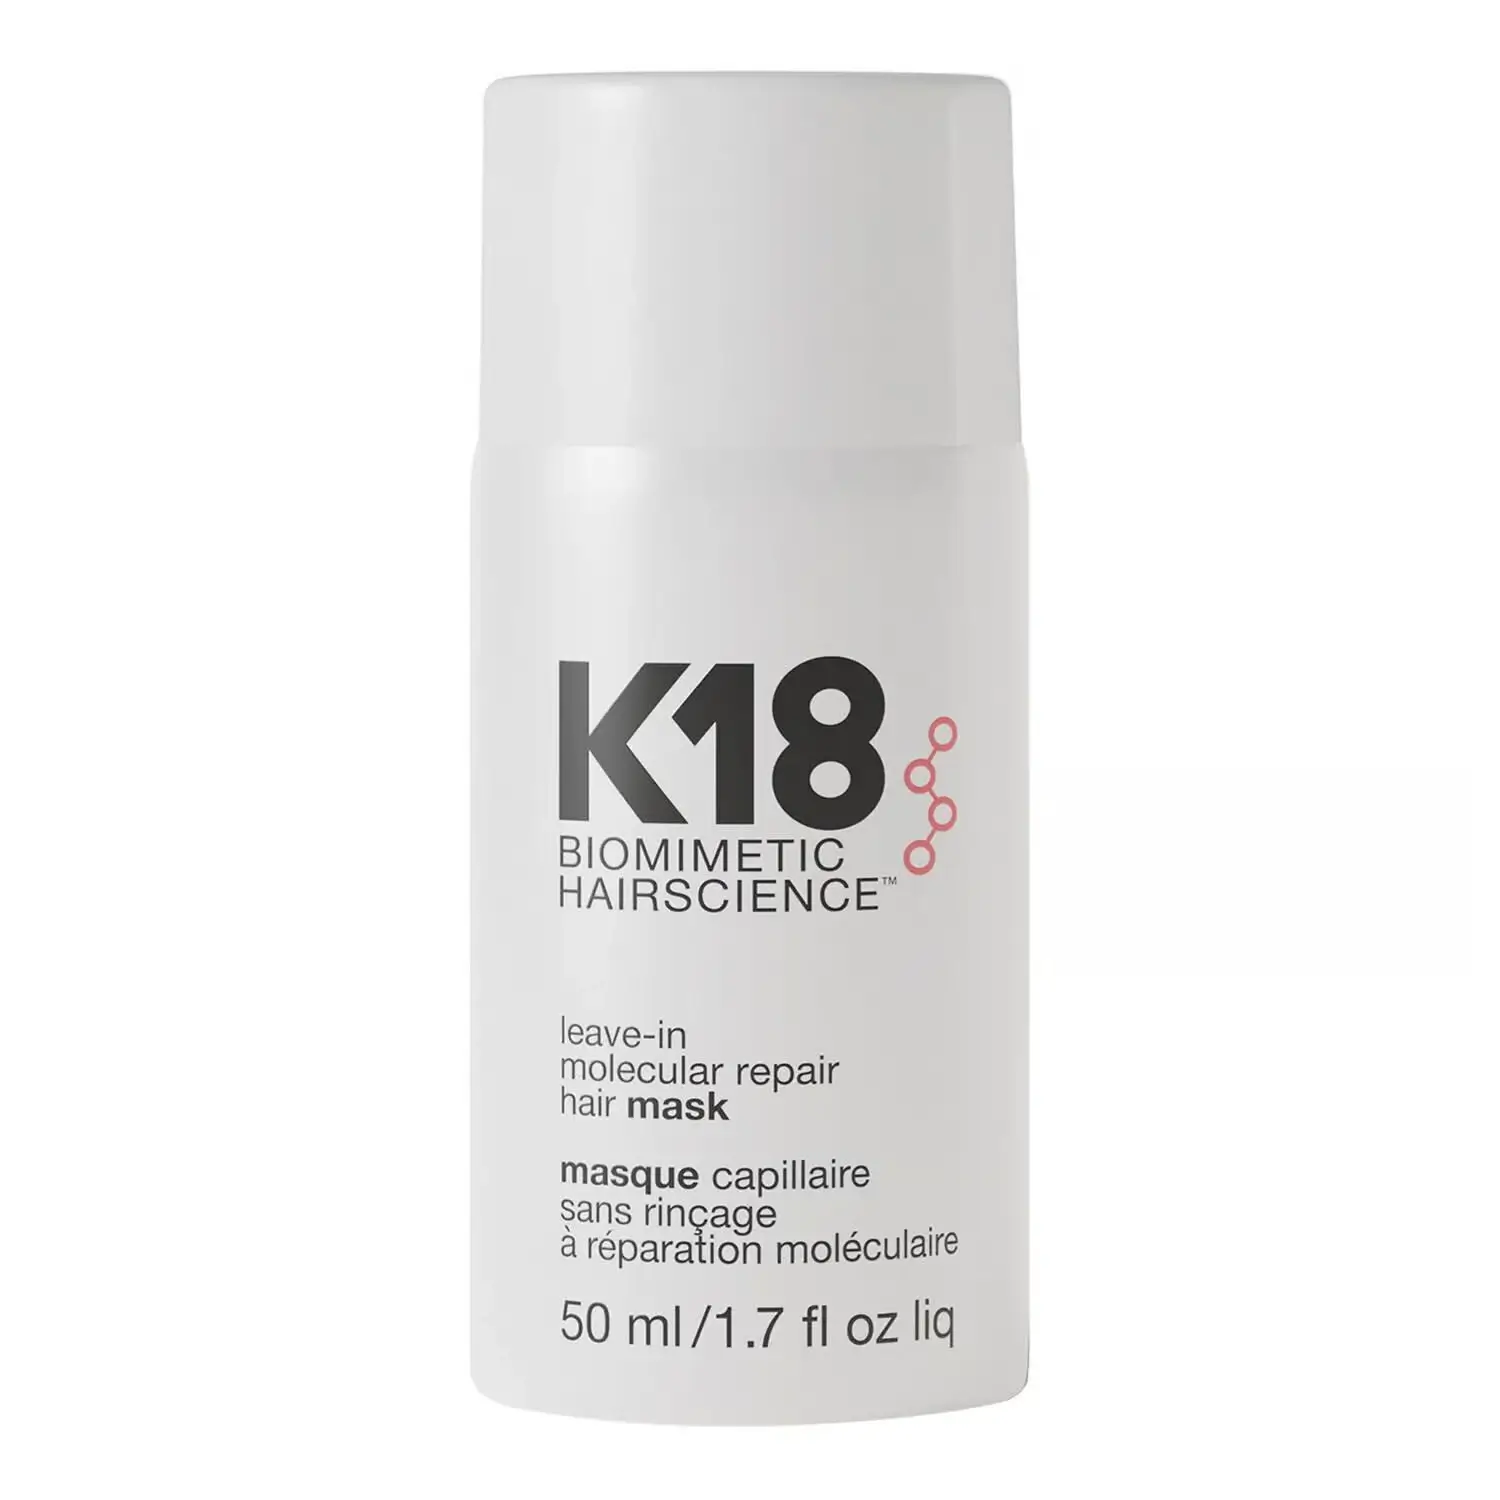 K18 Leave-in Molecular Repair Hair Mask 50ml Discounts and Cashback